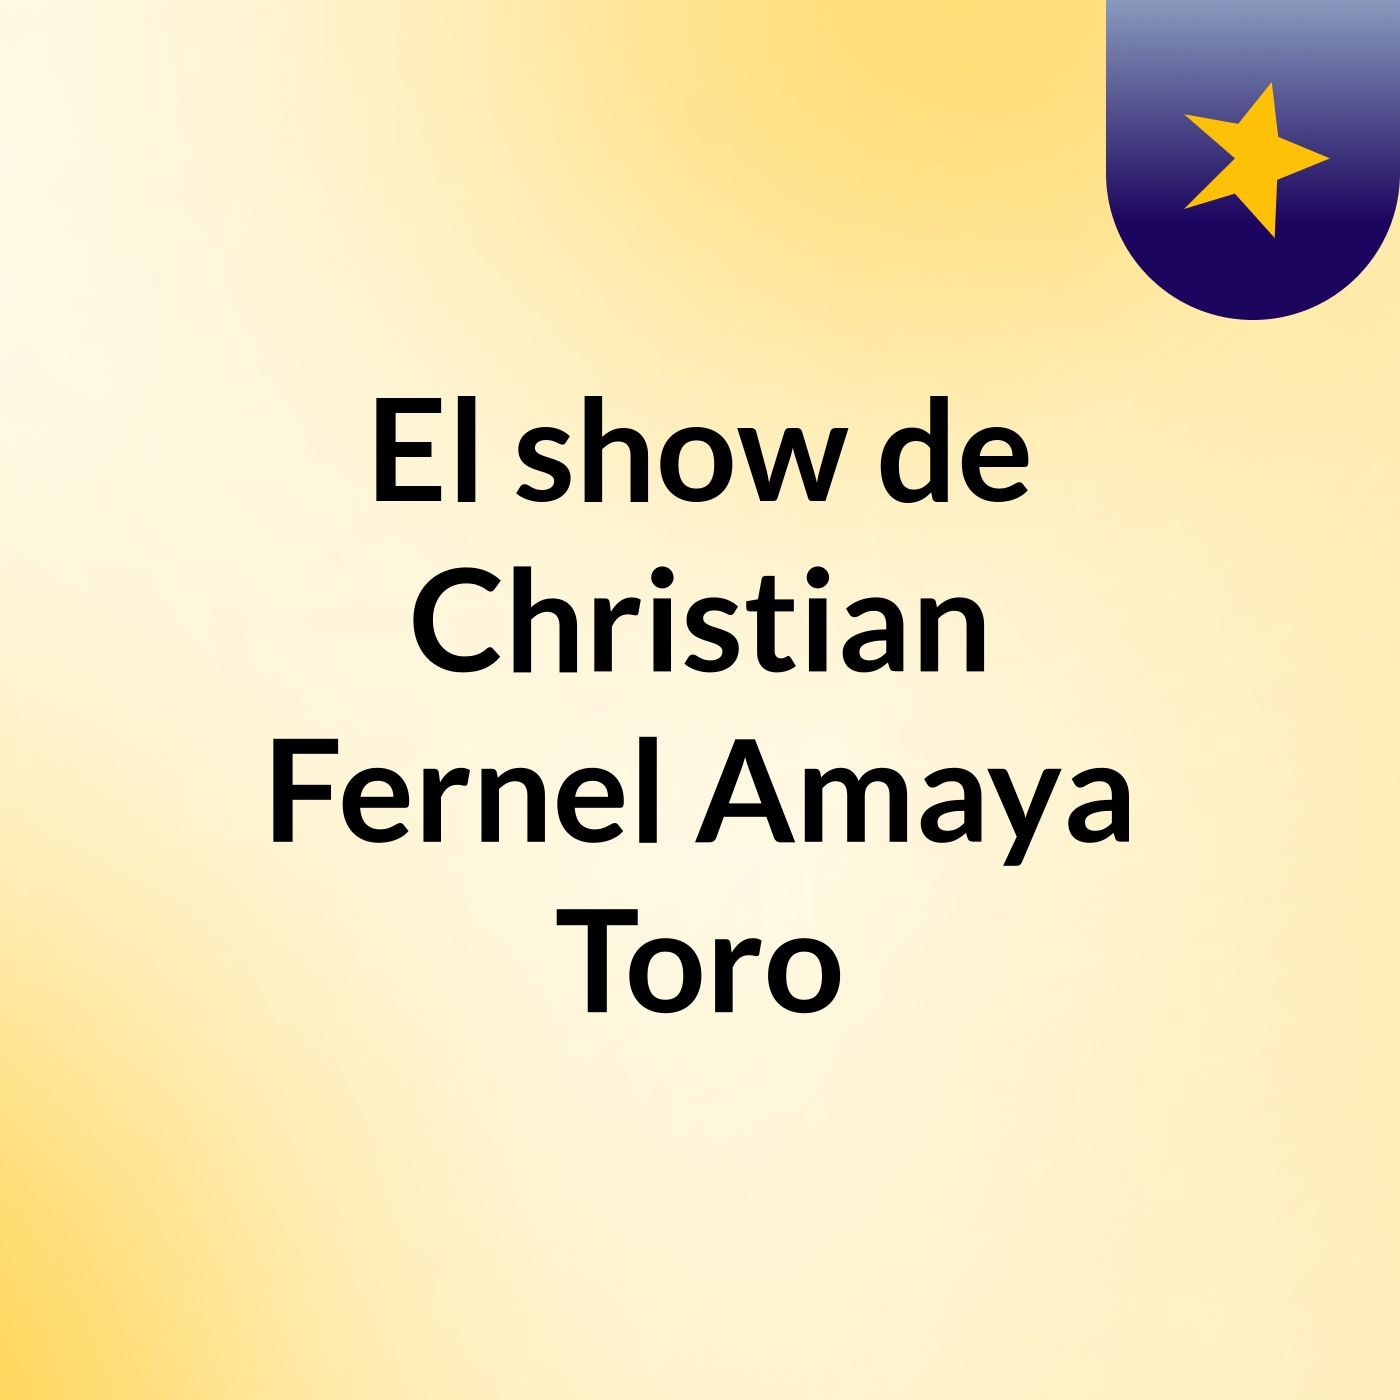 El show de Christian Fernel Amaya Toro